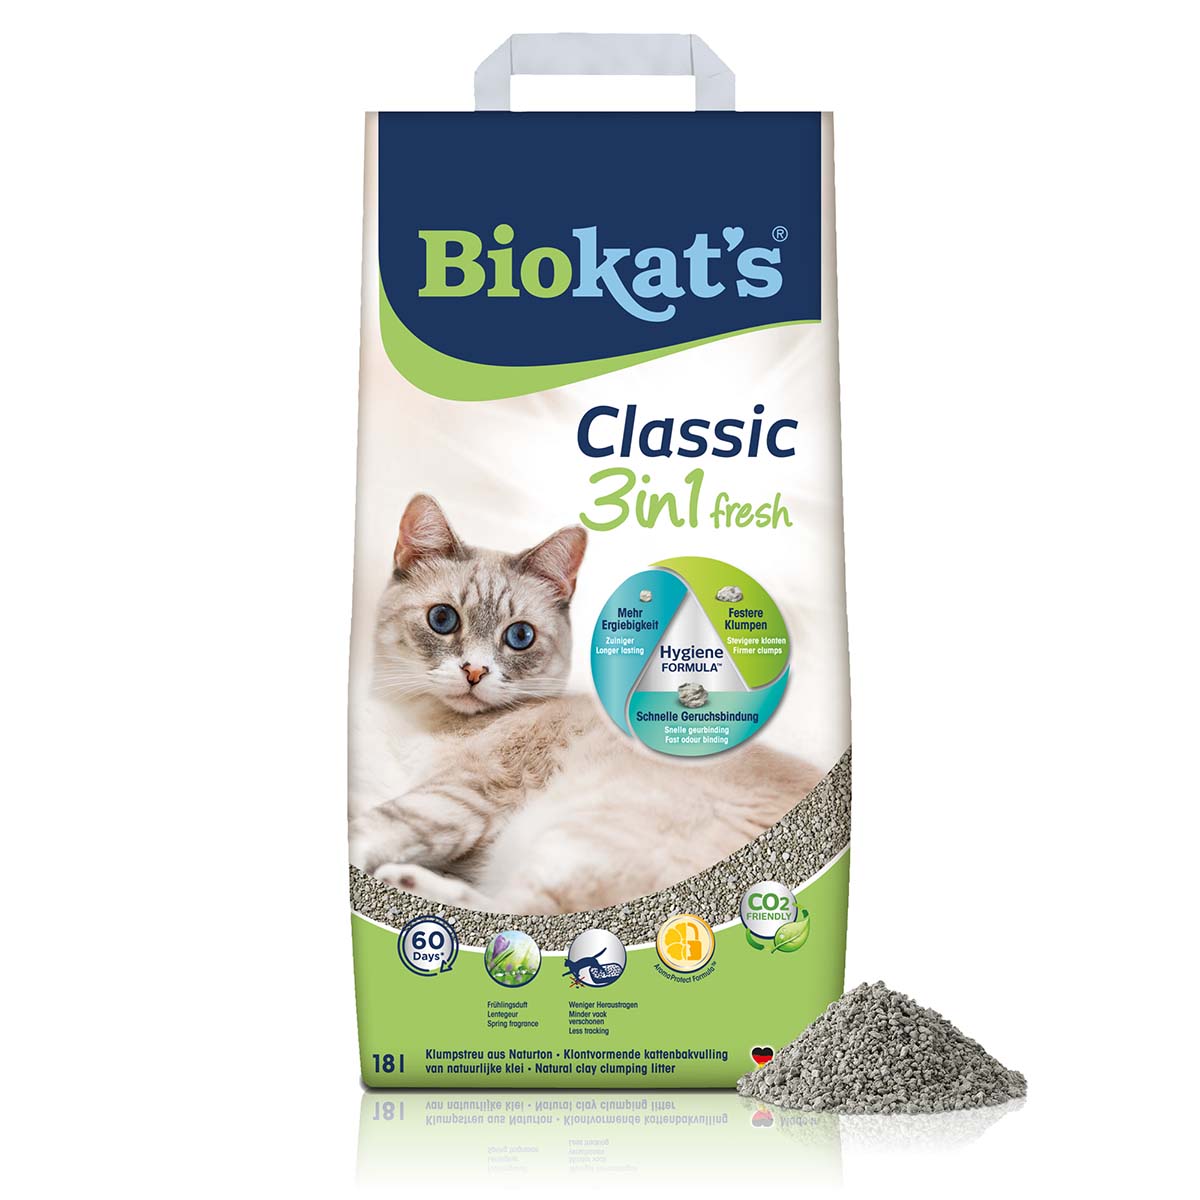 Biokat's Classic Fresh 3in1 18l von BioKat's